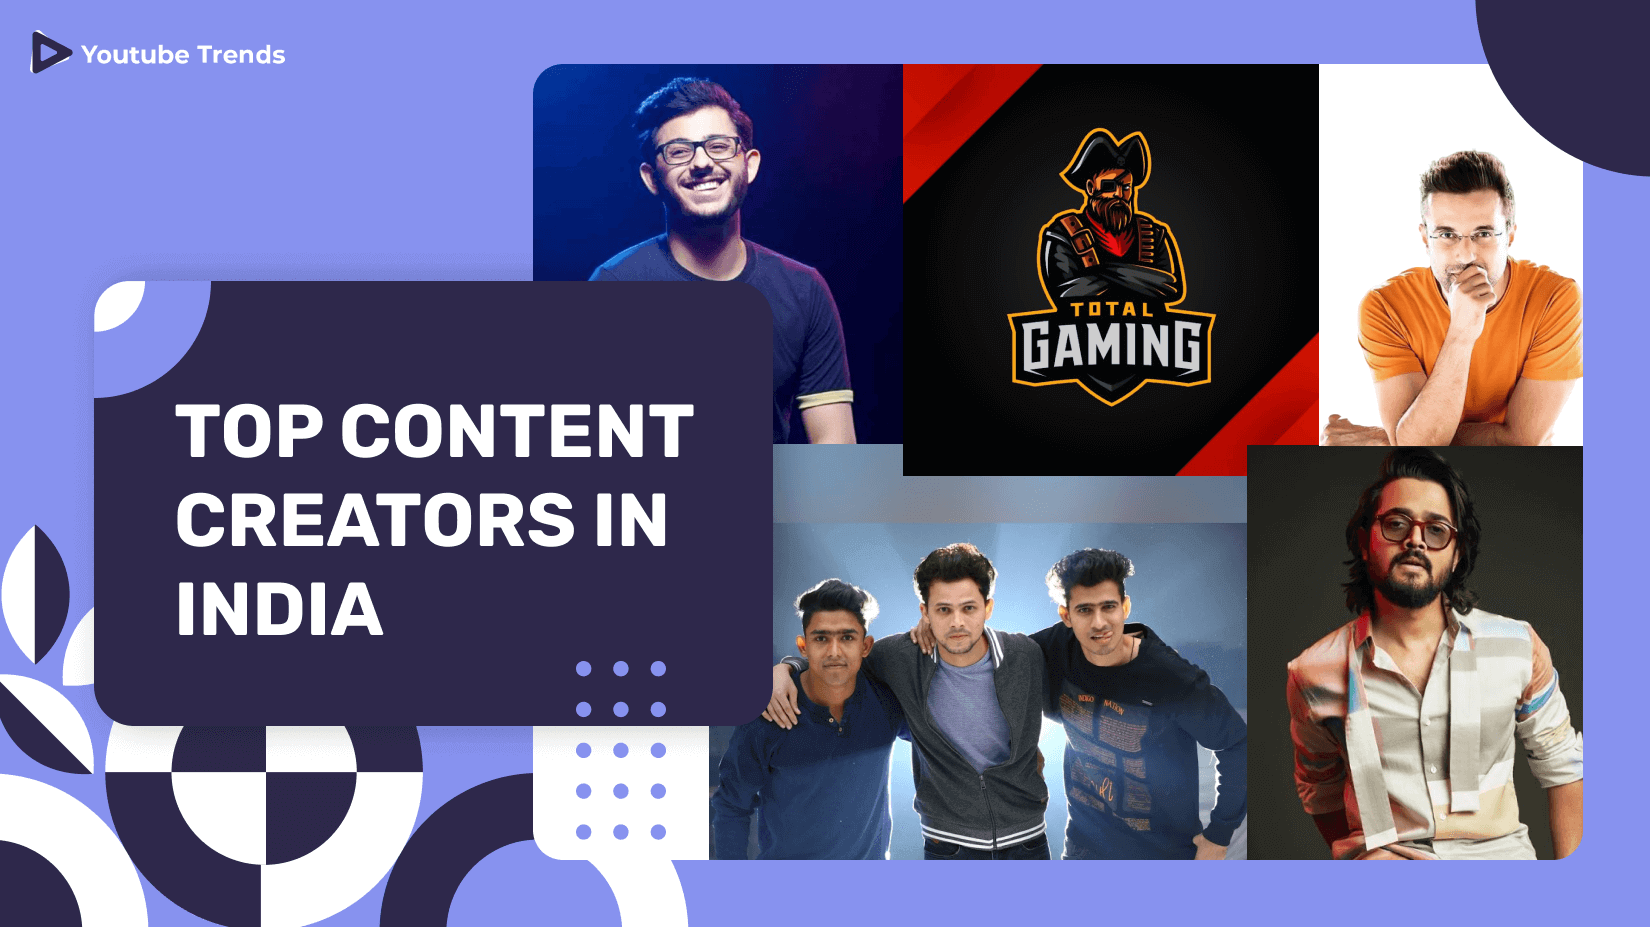 Top 5 Indian YouTube Content Creators